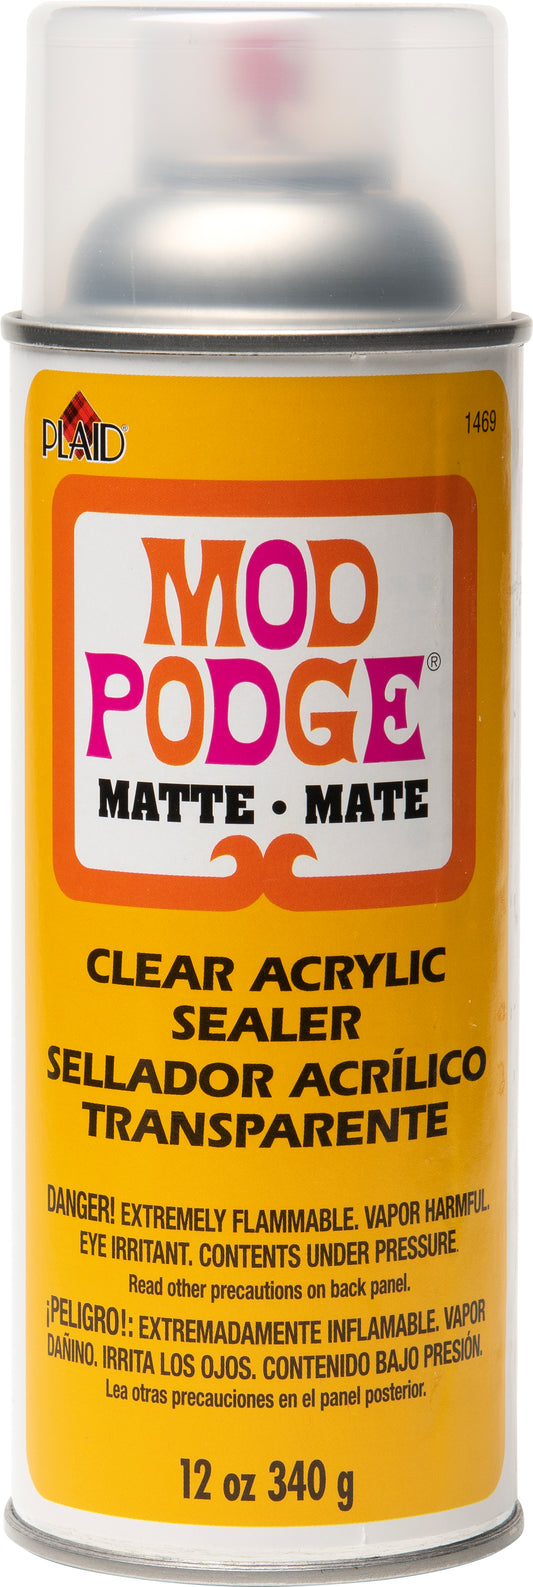 Mod Podge Matte Clear Acrylic Sealer